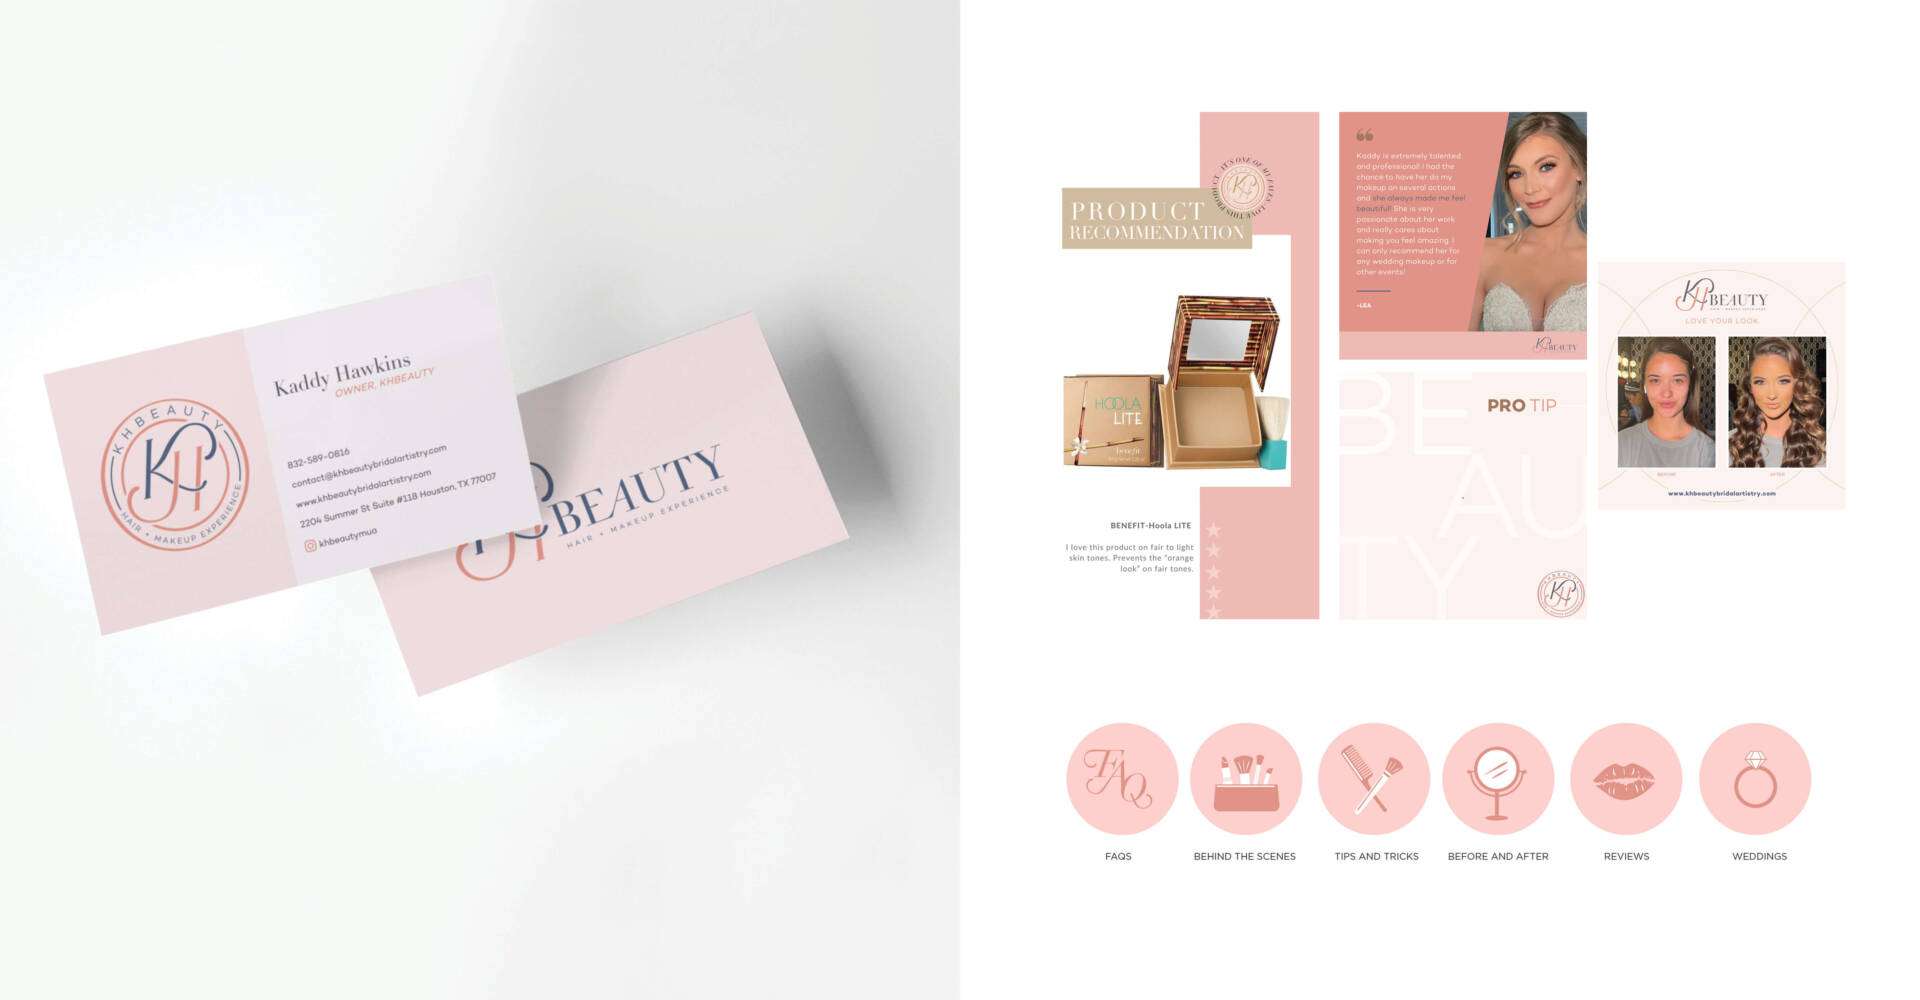 KH Beauty Social Media Toolkit + Business Card Design